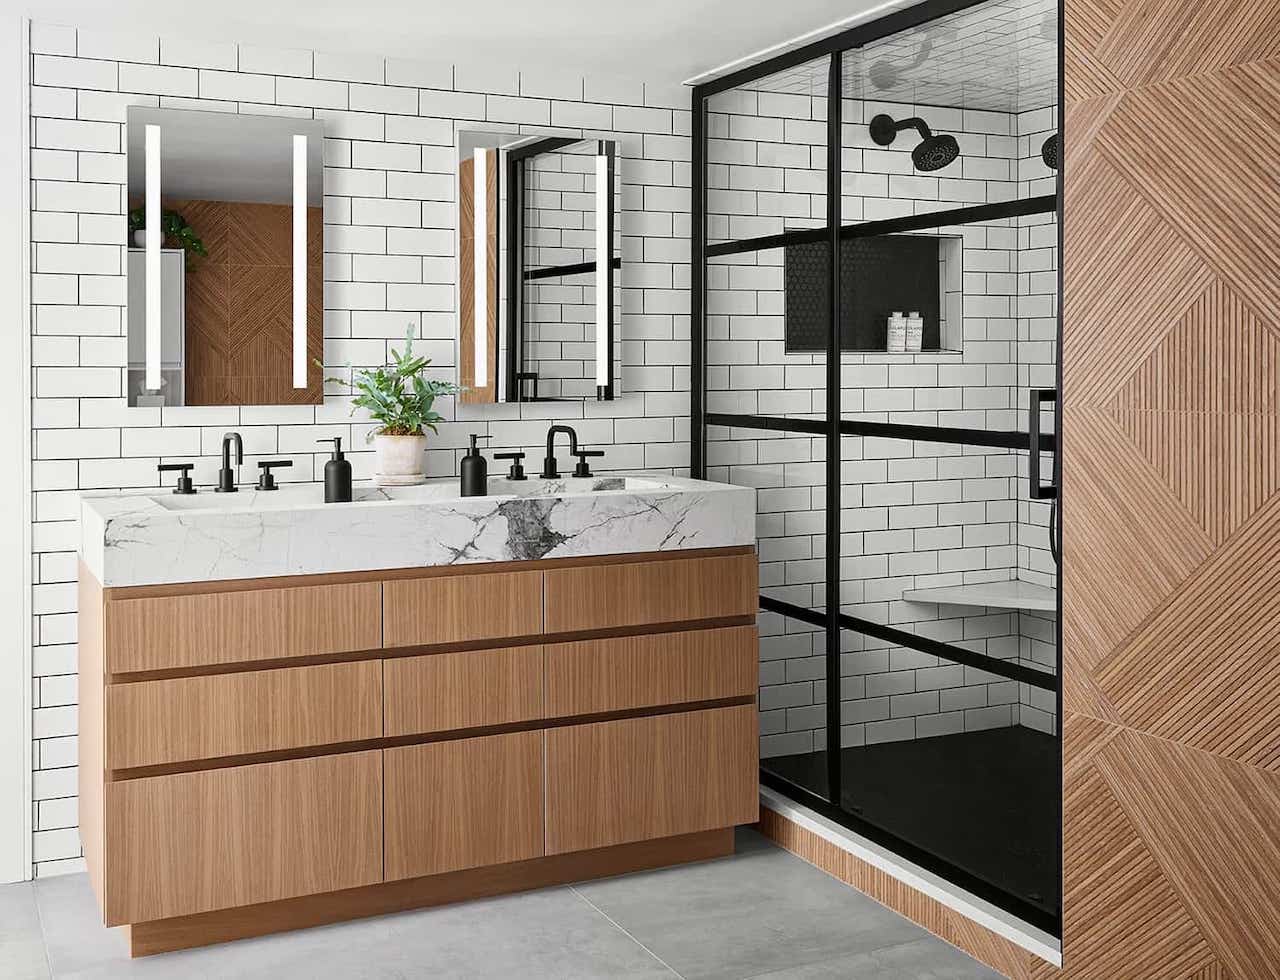 japandi design style bathroom vanity tiles